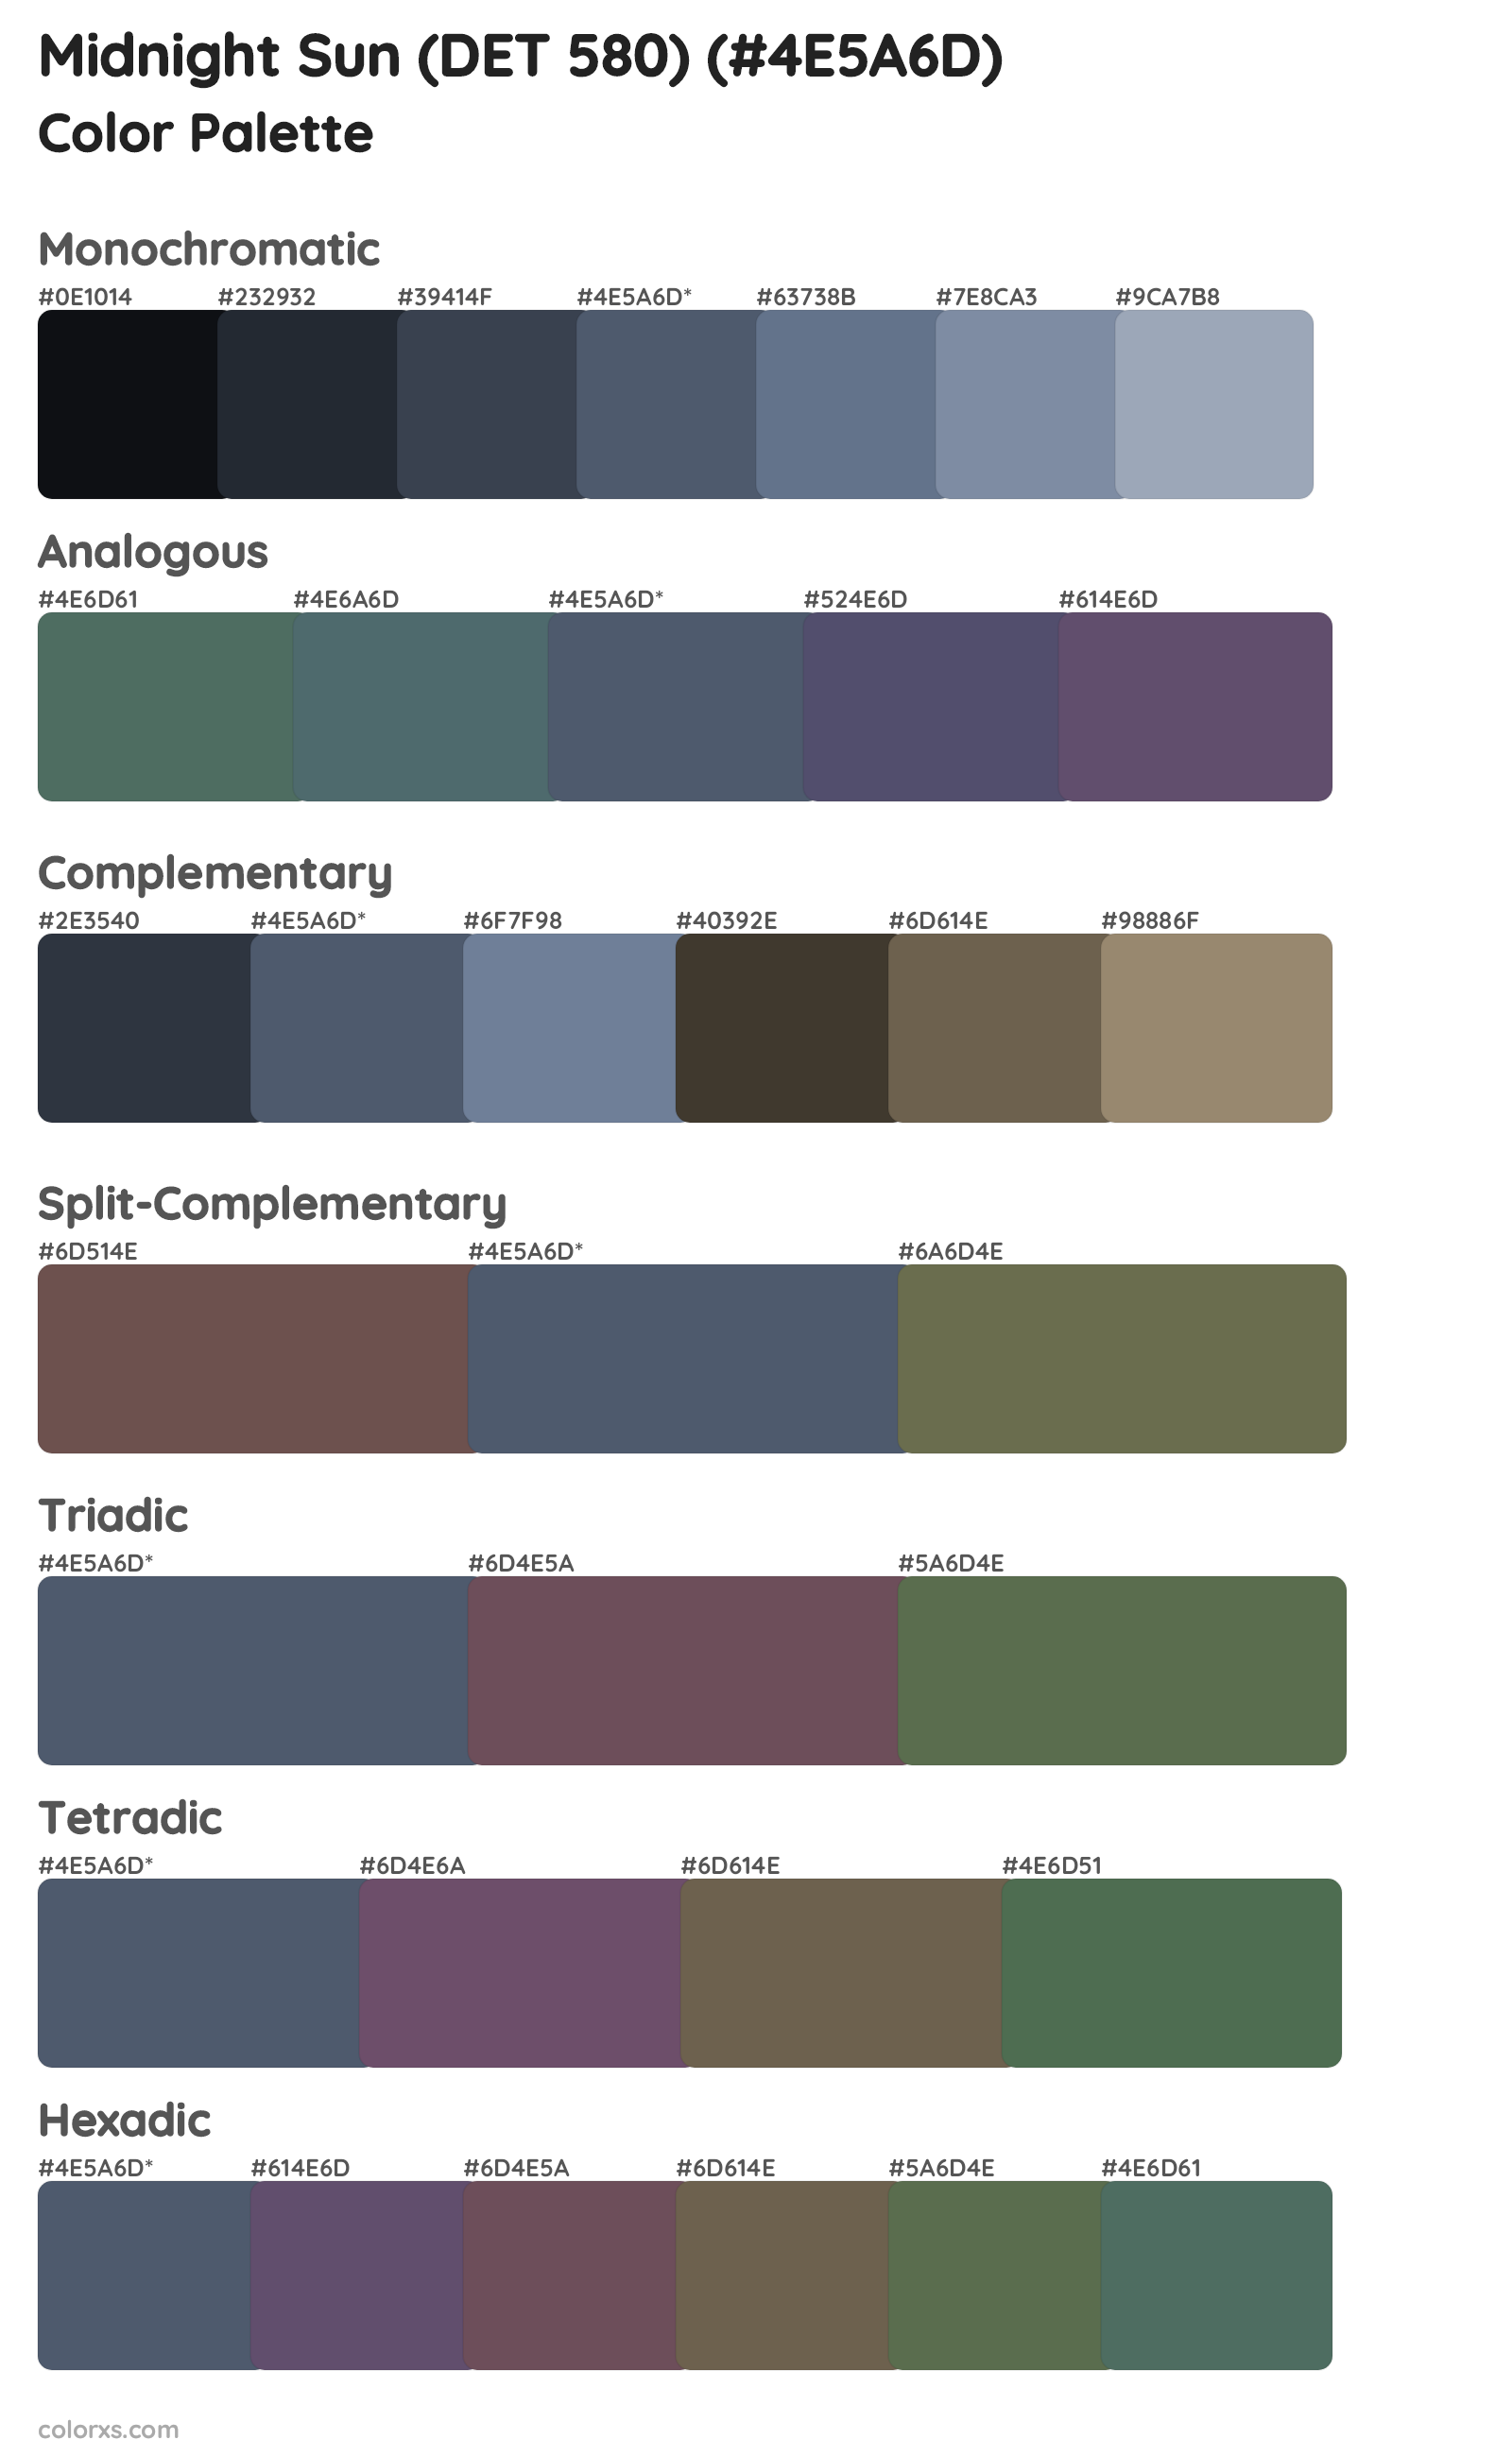 Midnight Sun (DET 580) Color Scheme Palettes